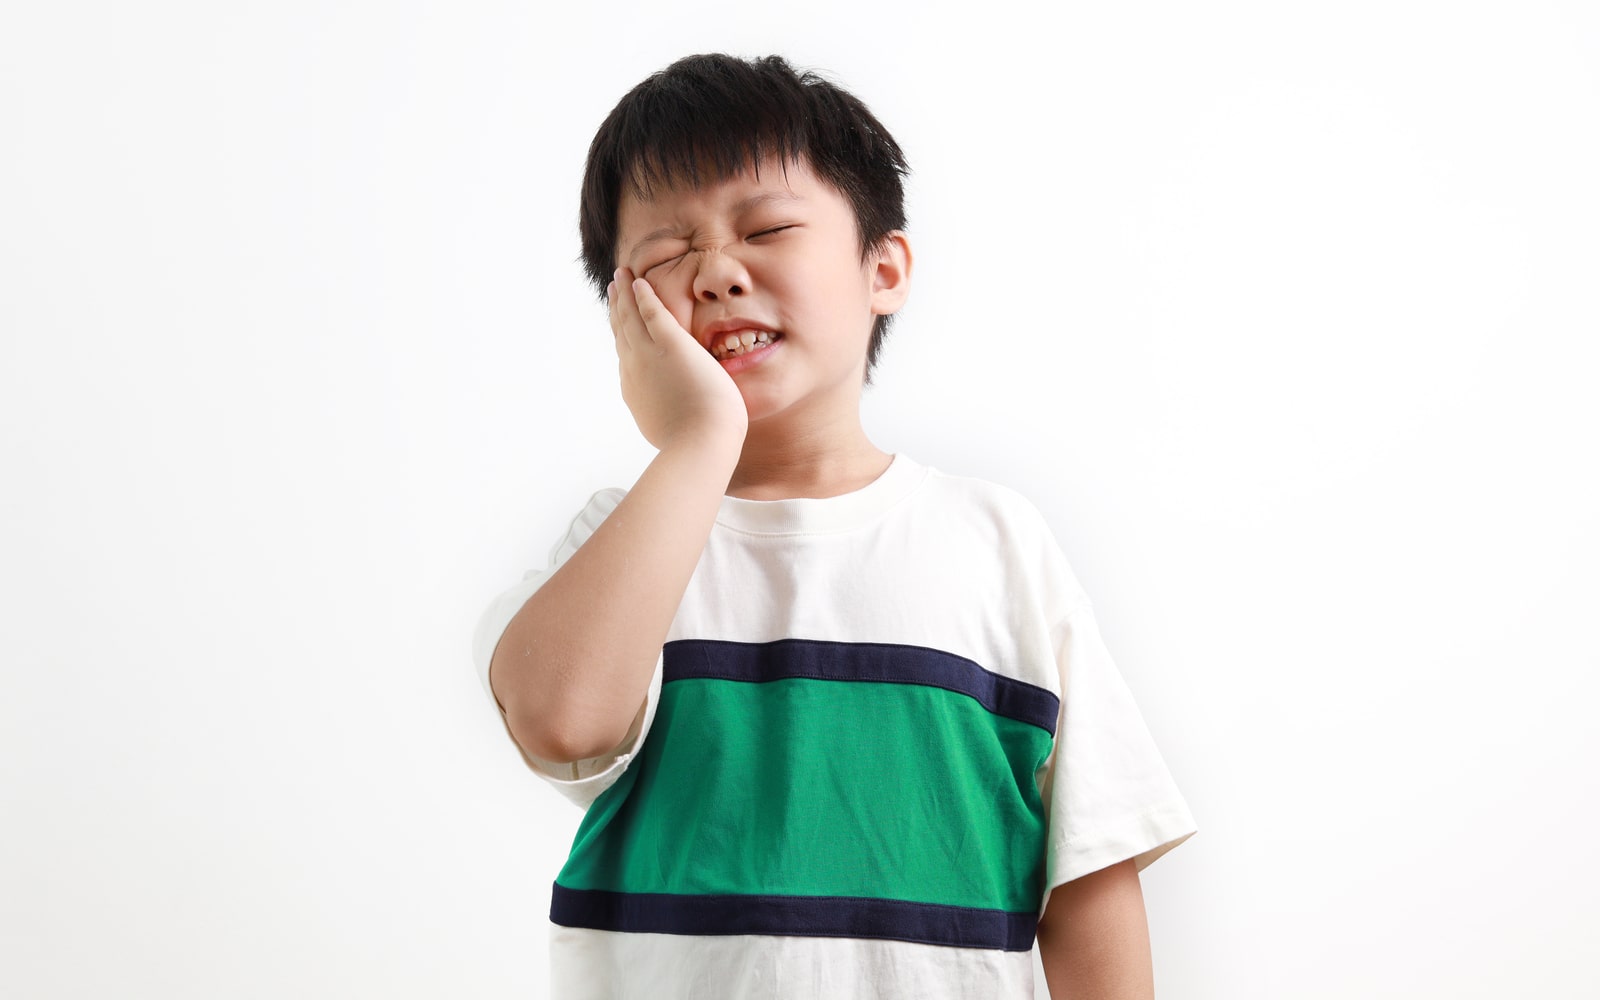 Child suffering dental pain